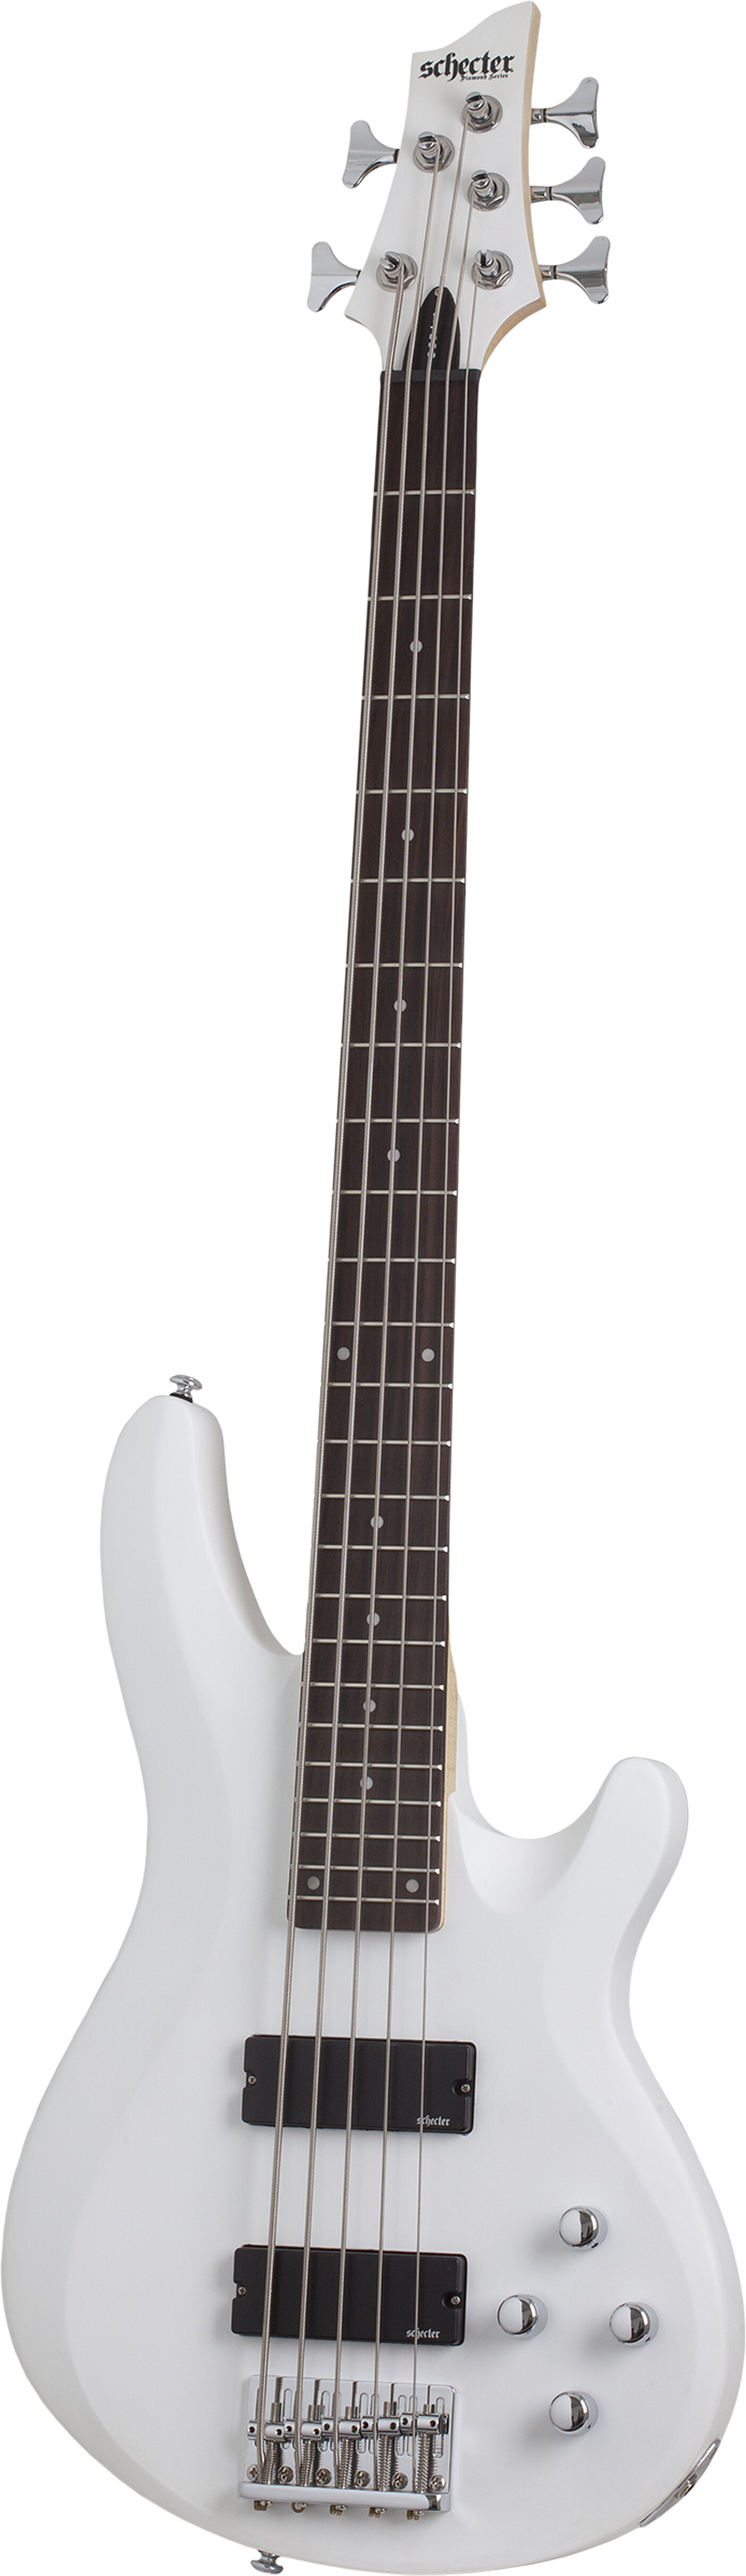 Schecter C-5 Deluxe Bass Satin White -  587